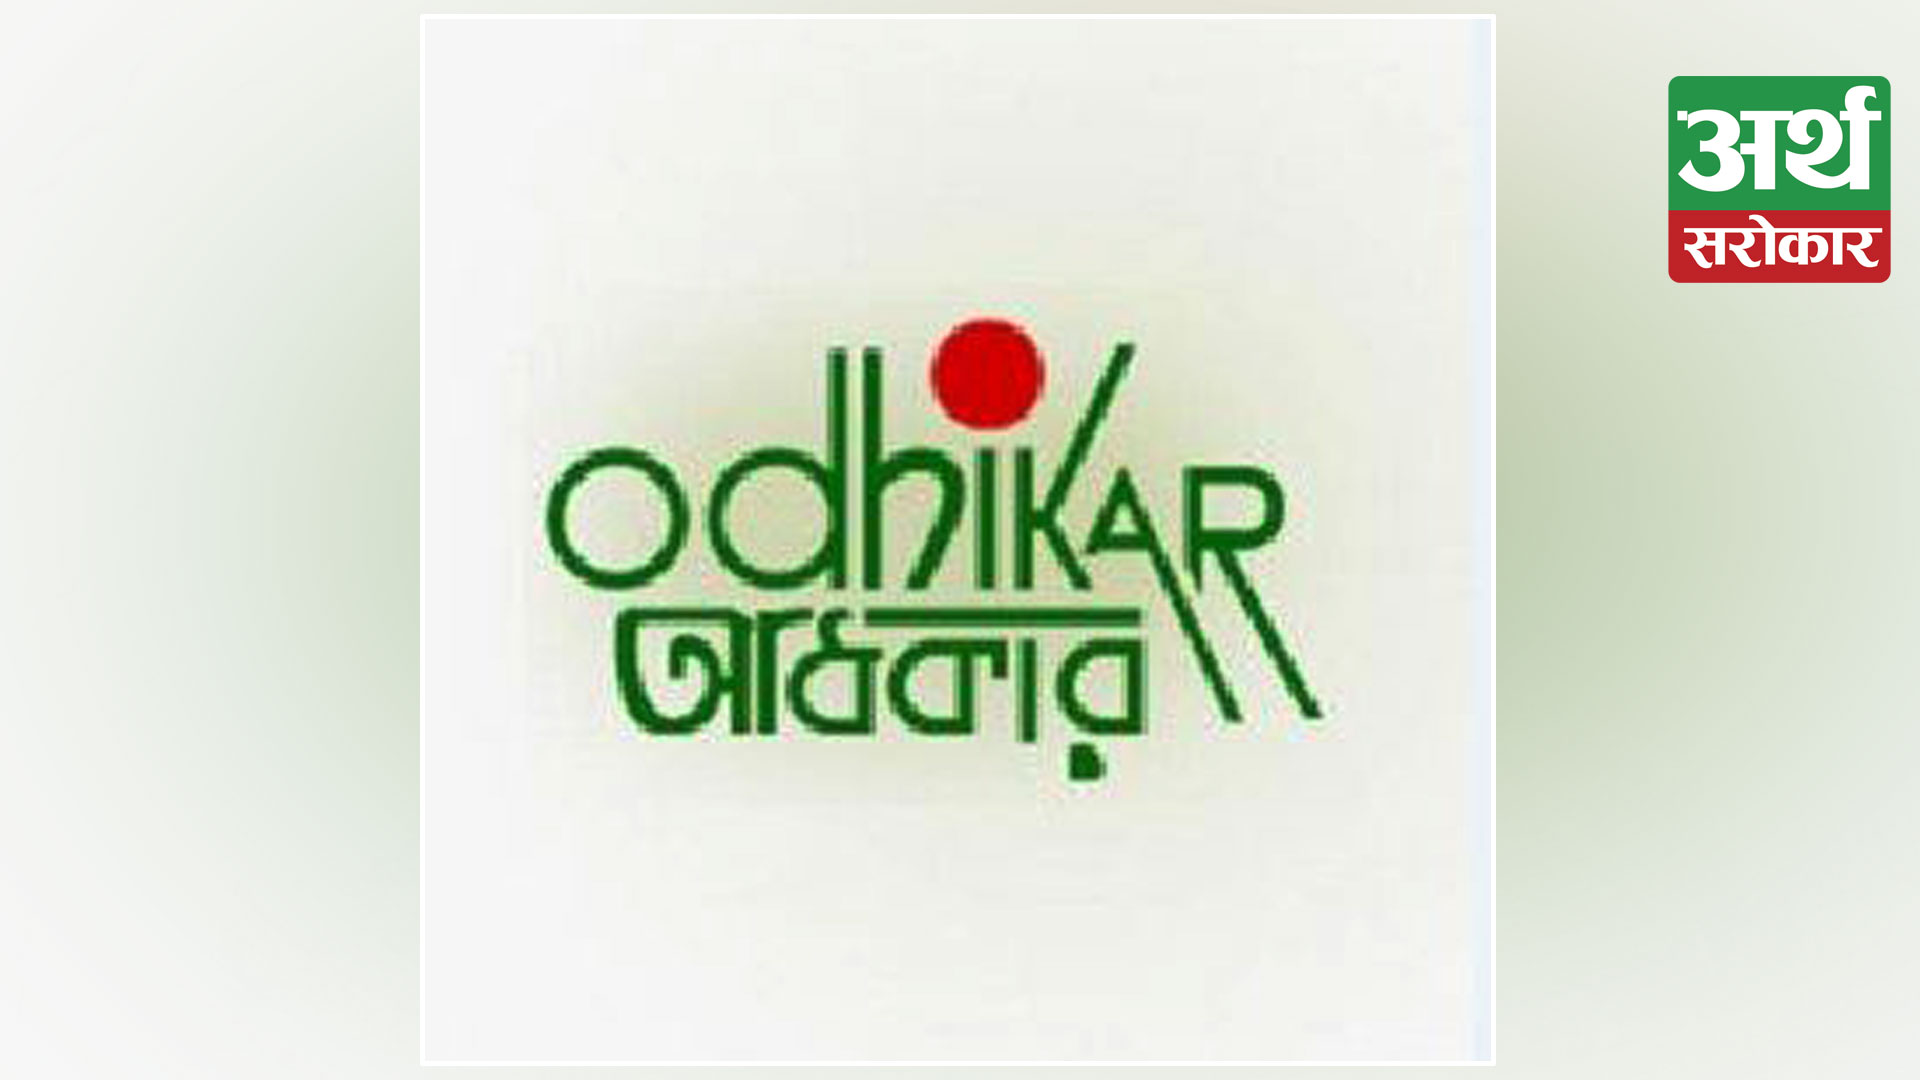 Why did Bangladesh need to cancel an NGO, Odhikar’s license?